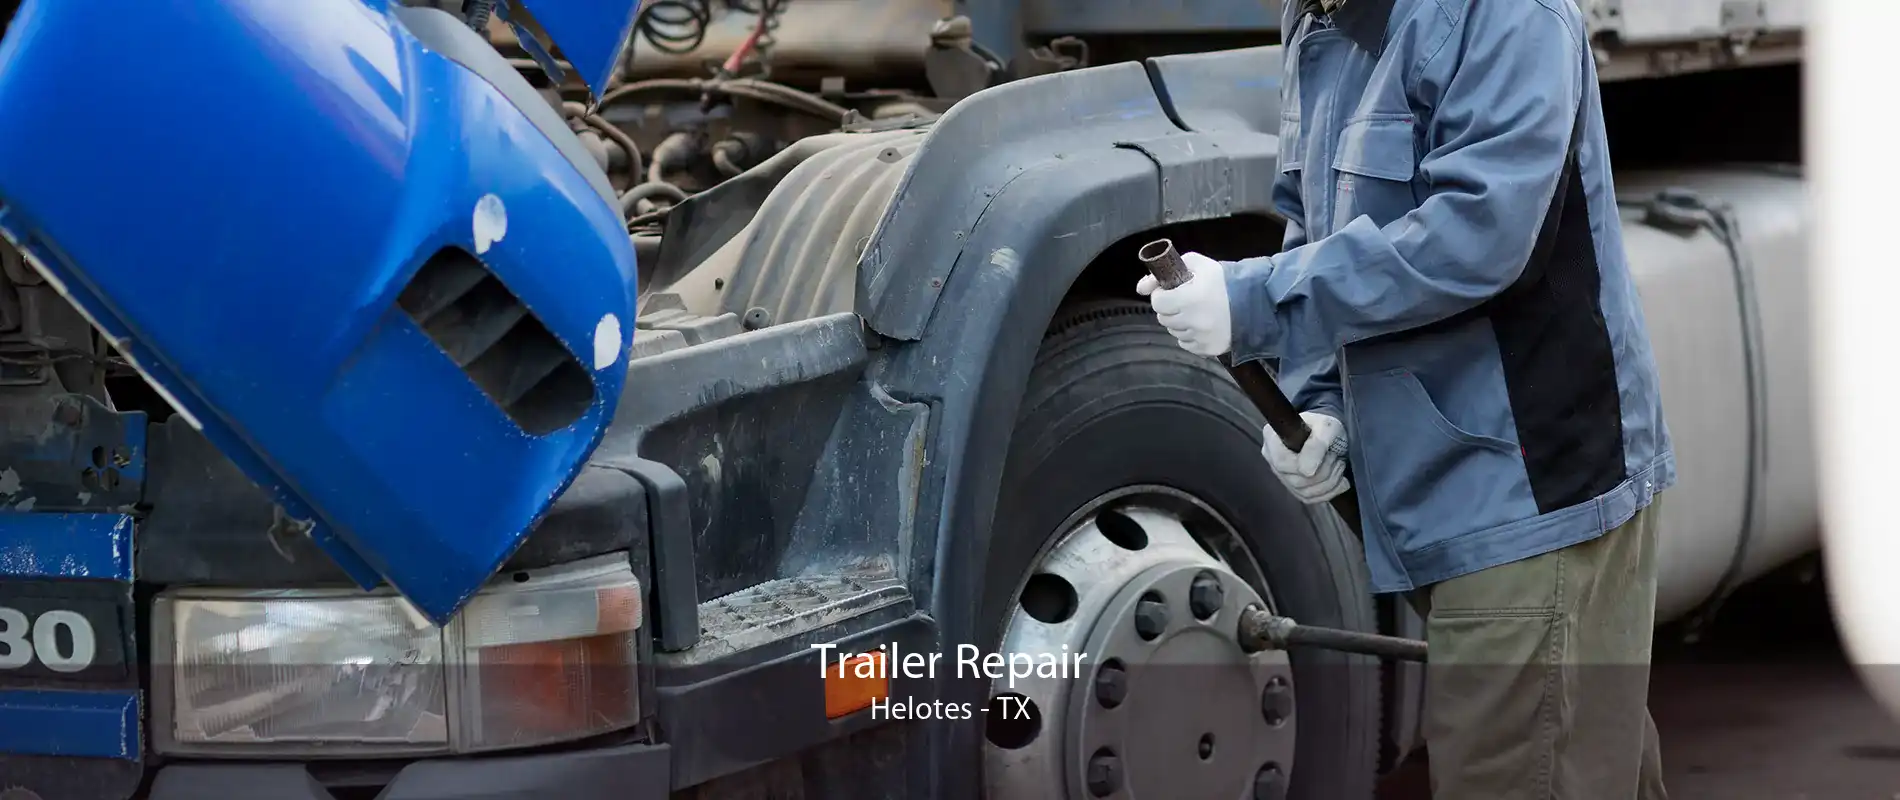 Trailer Repair Helotes - TX